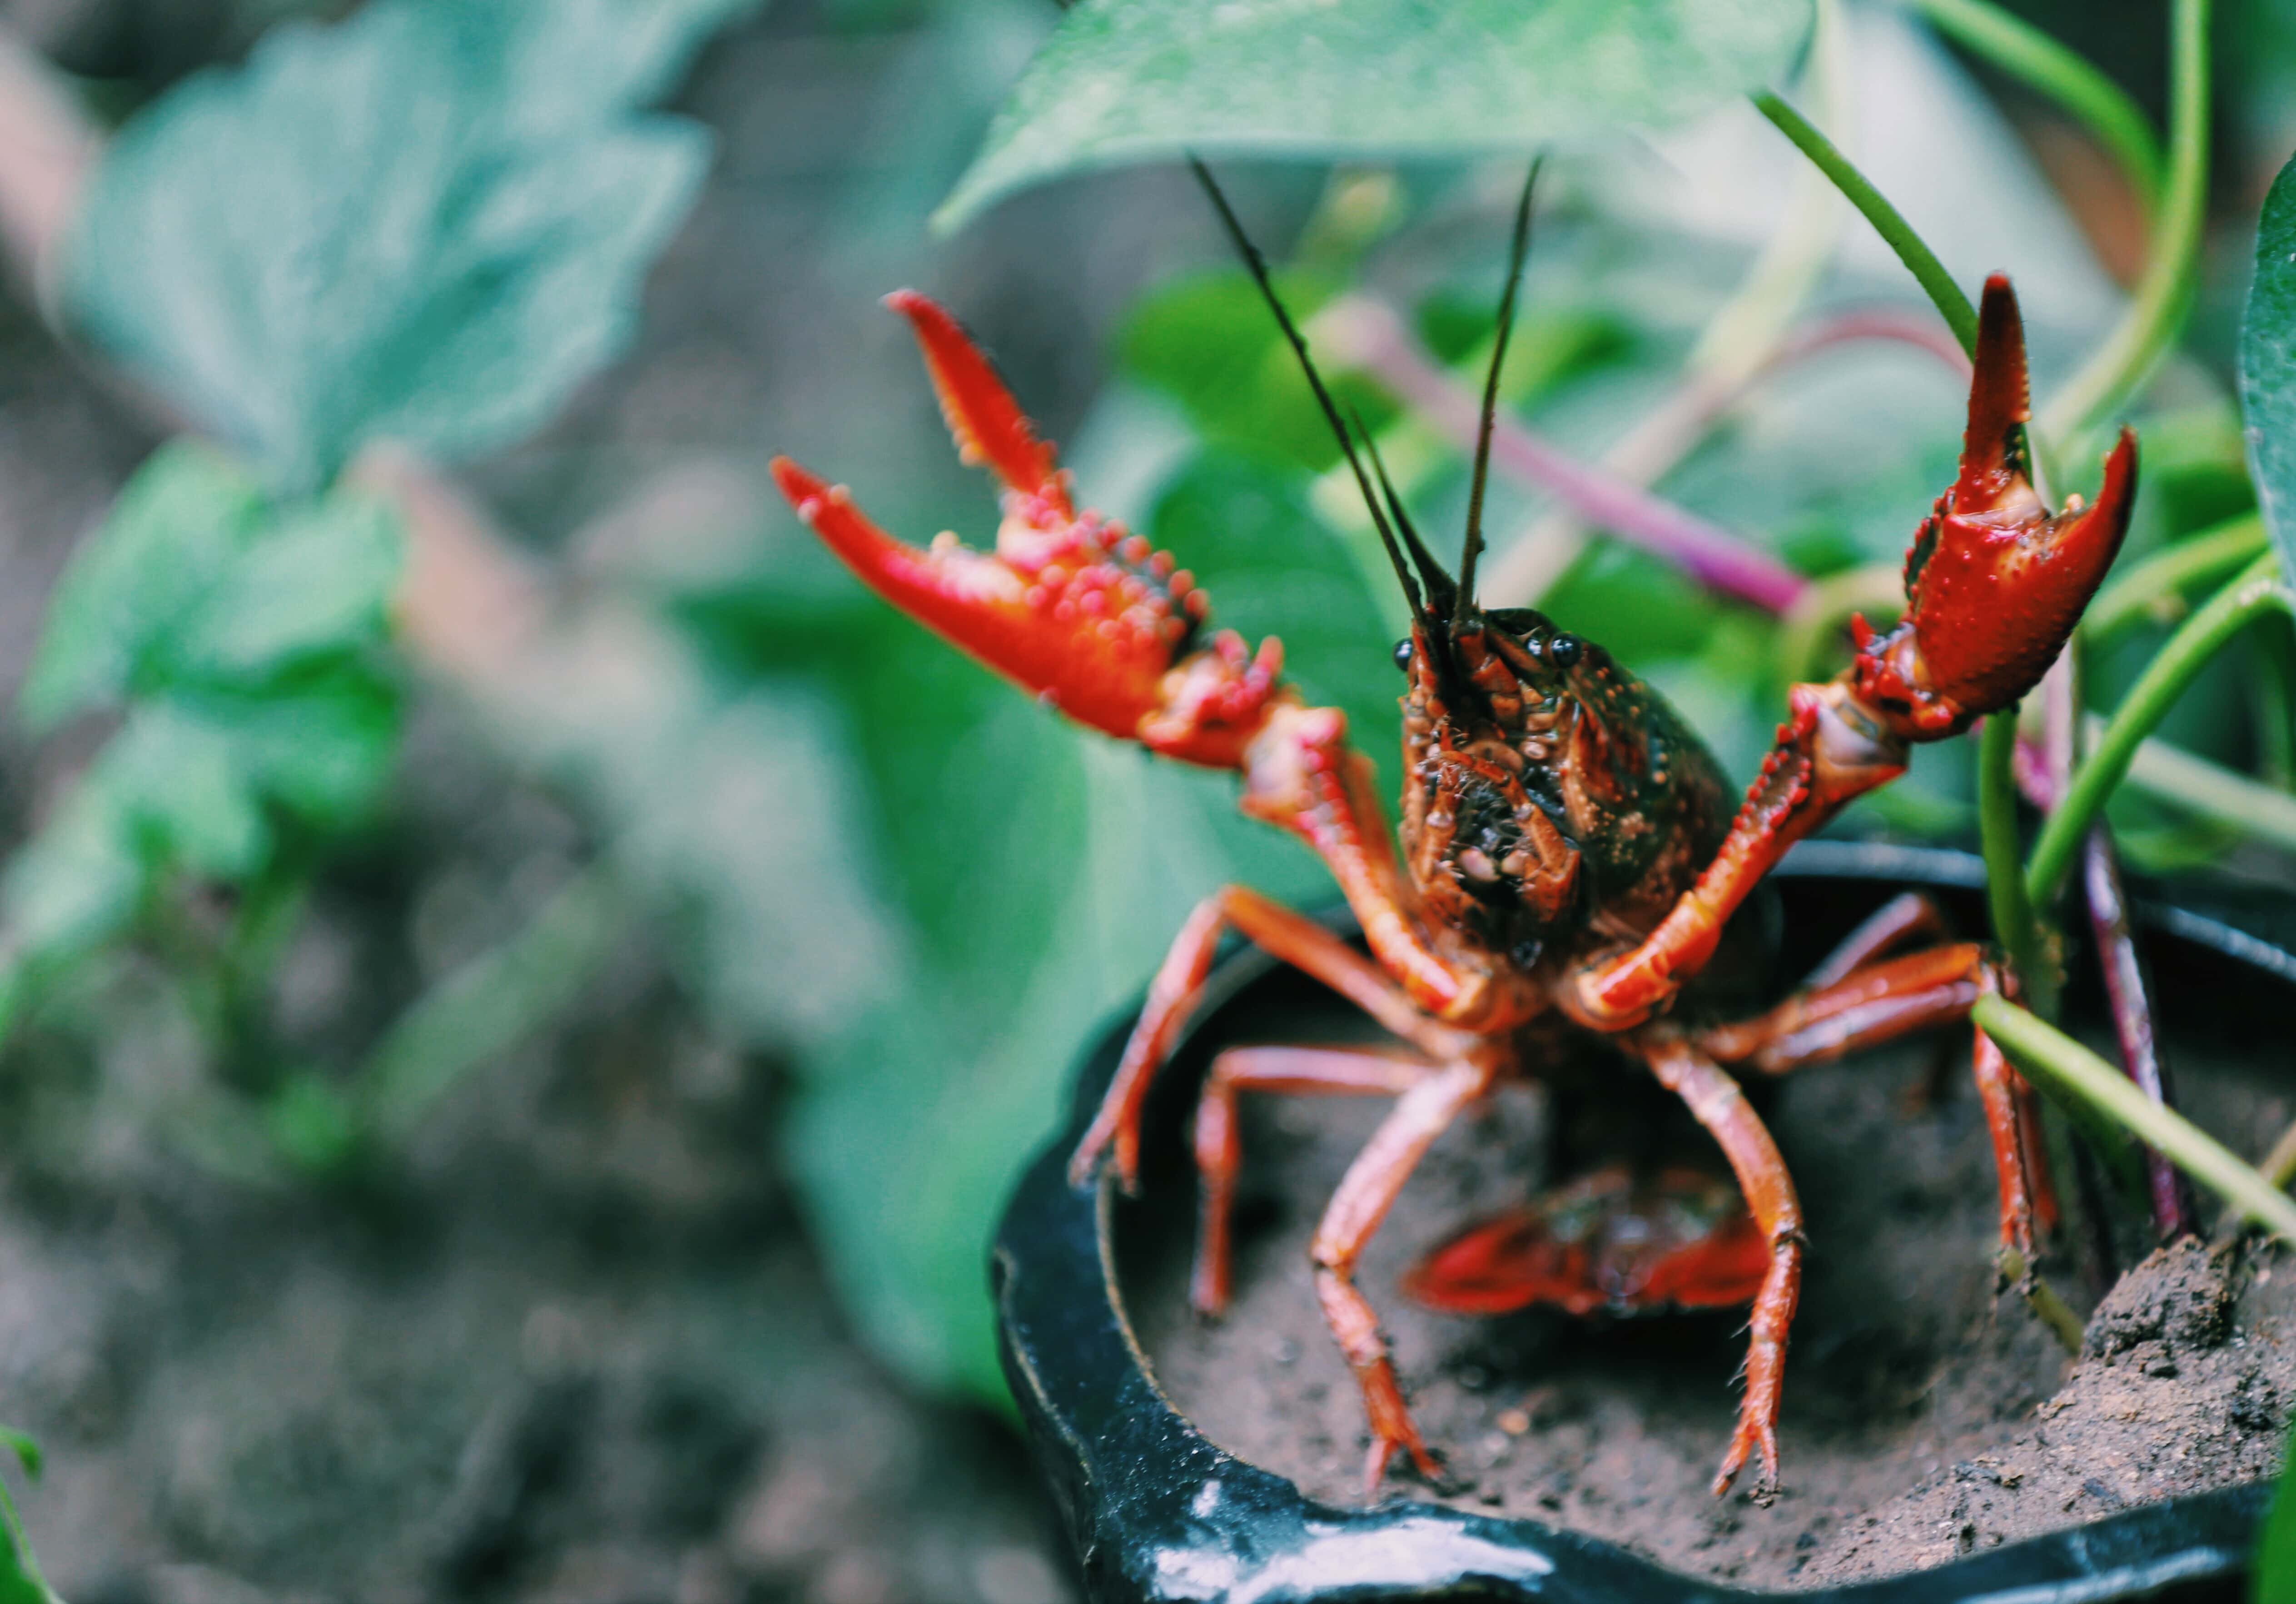 crayfish on the plant